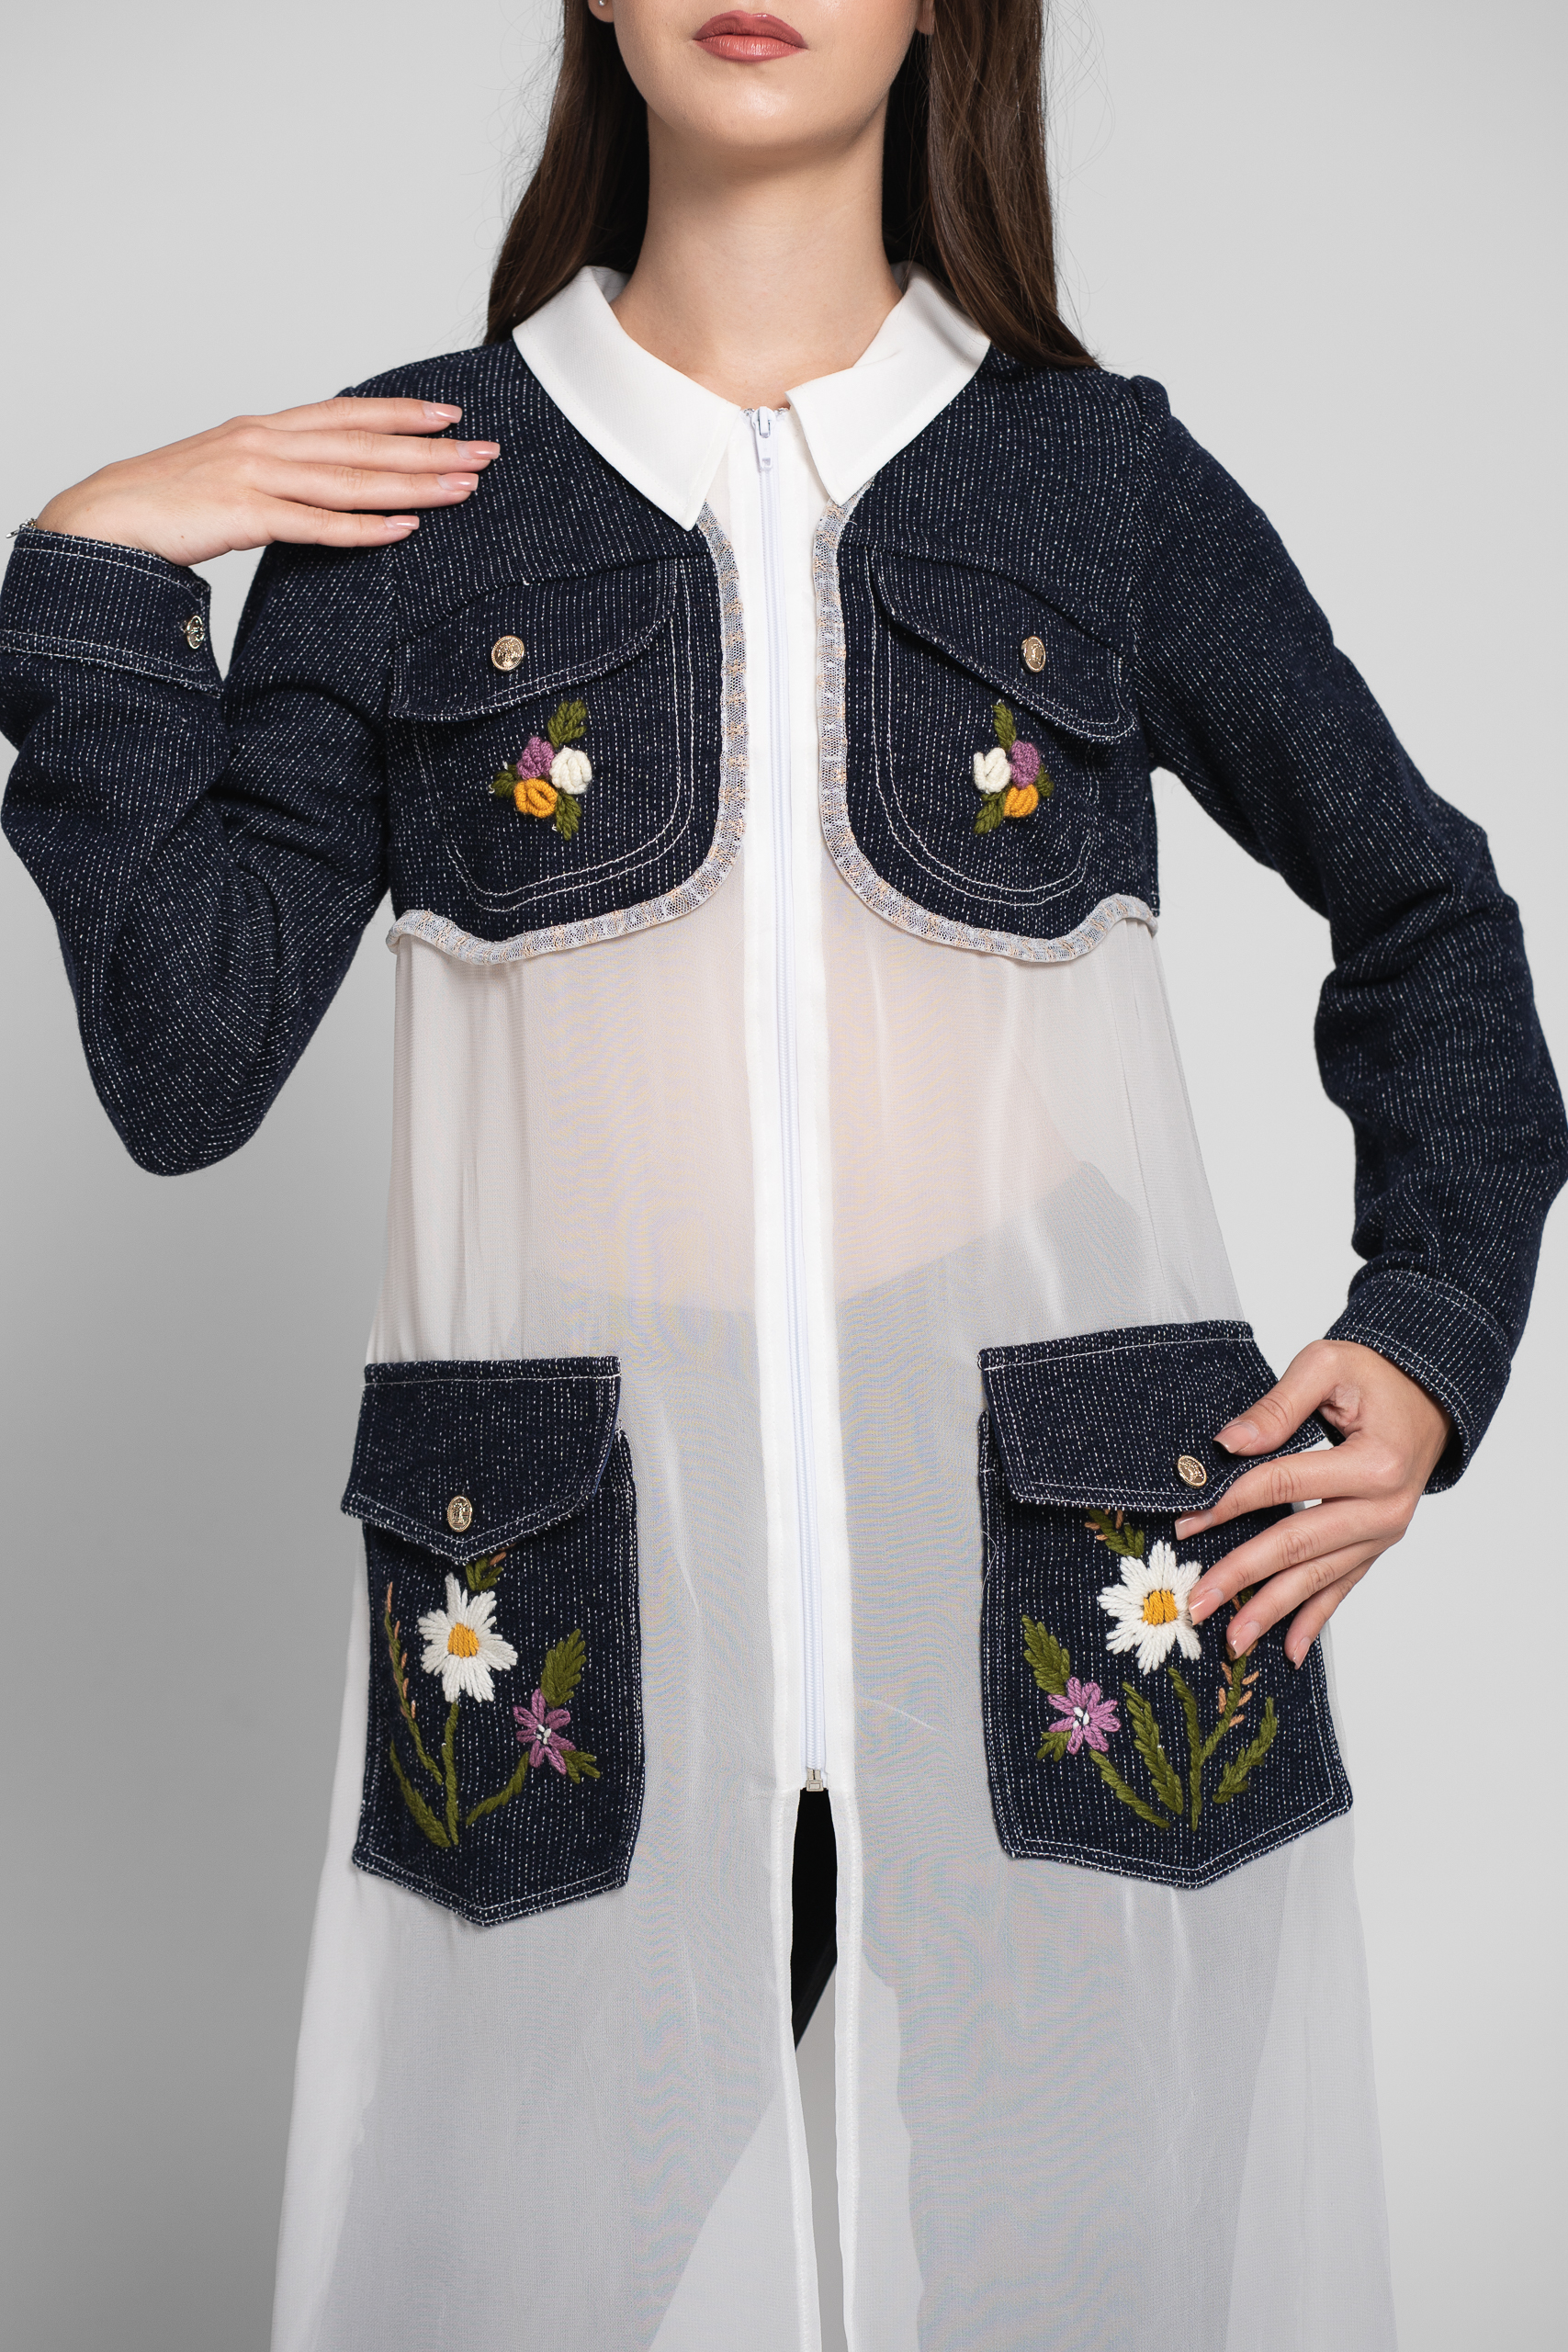 JACKET DORIS navy blue in plush and veil. Natural fabrics, original design, handmade embroidery